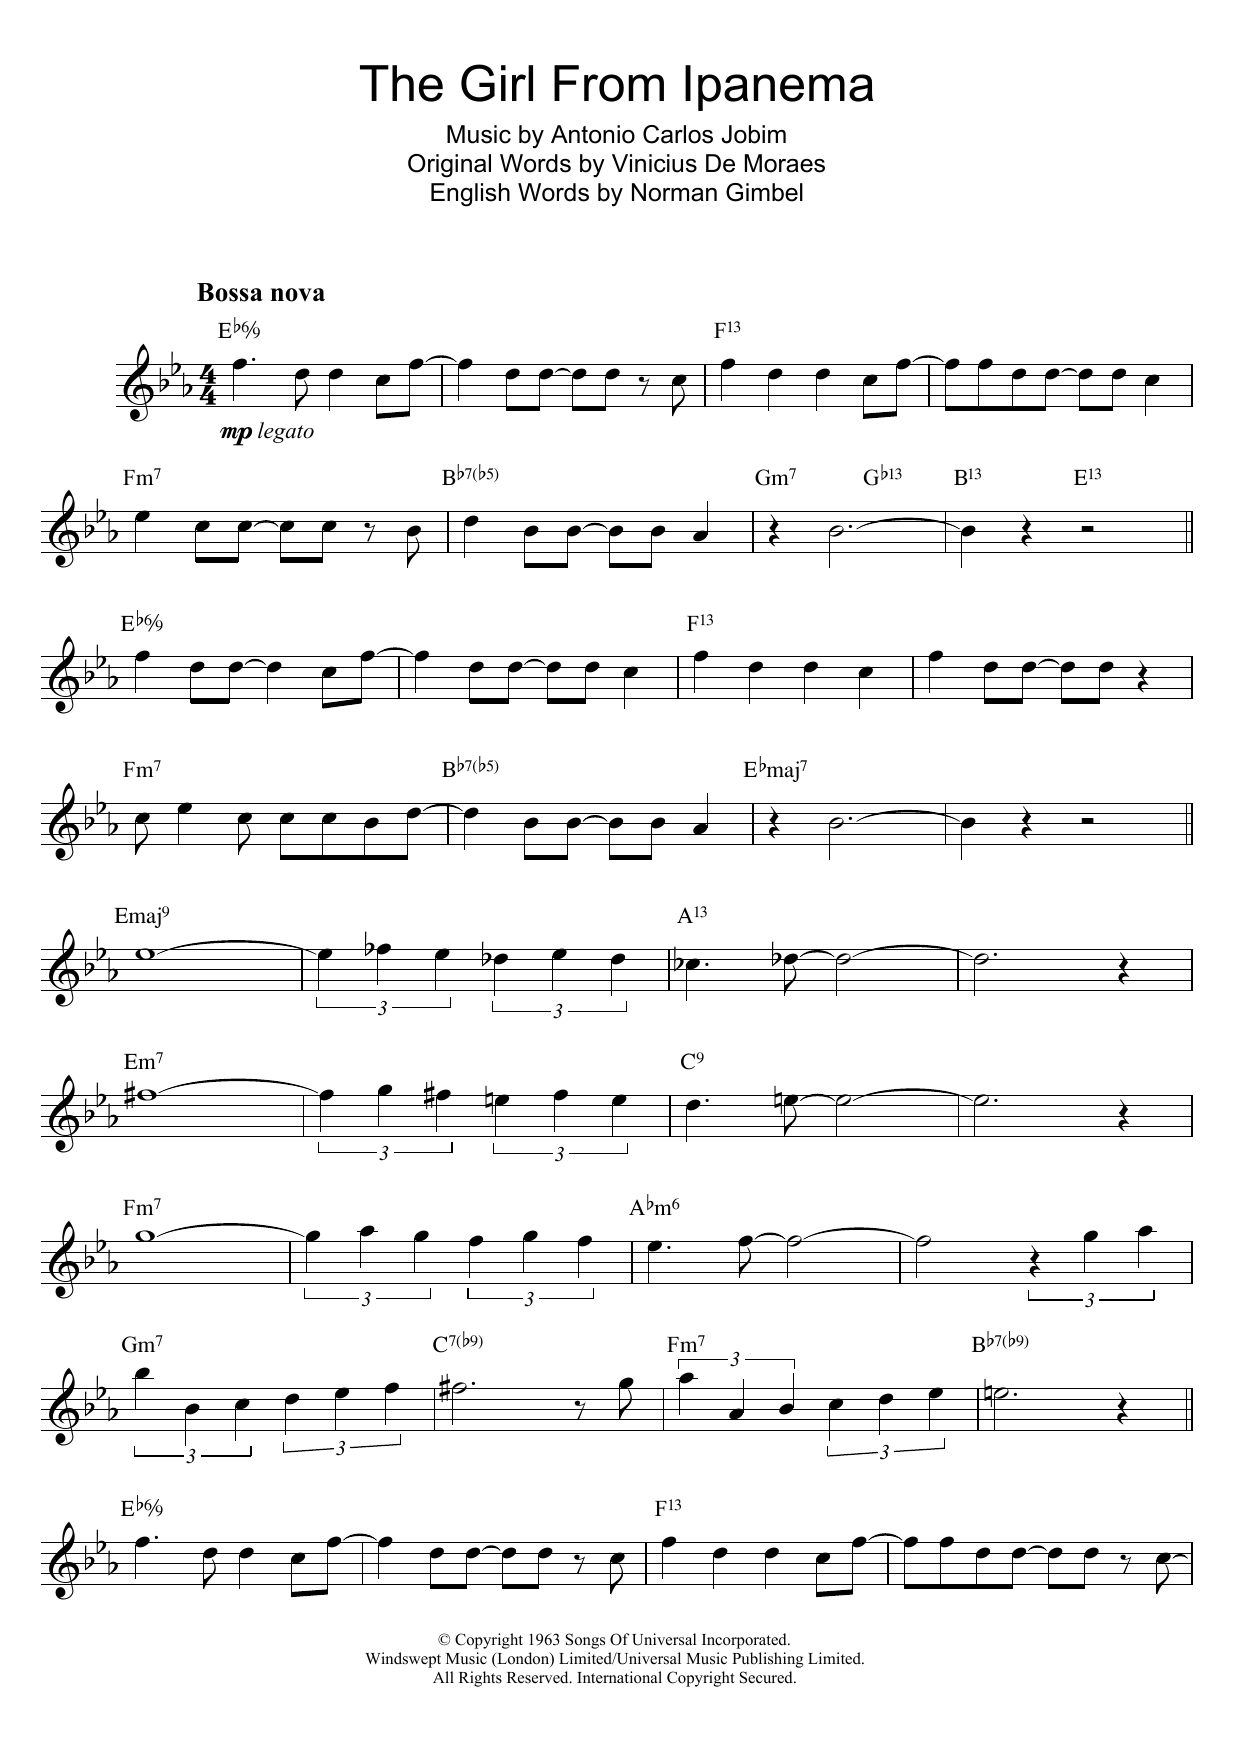 Antonio Carlos Jobim The Girl From Ipanema (Garota De Ipanema) Sheet Music Notes & Chords for Alto Saxophone - Download or Print PDF